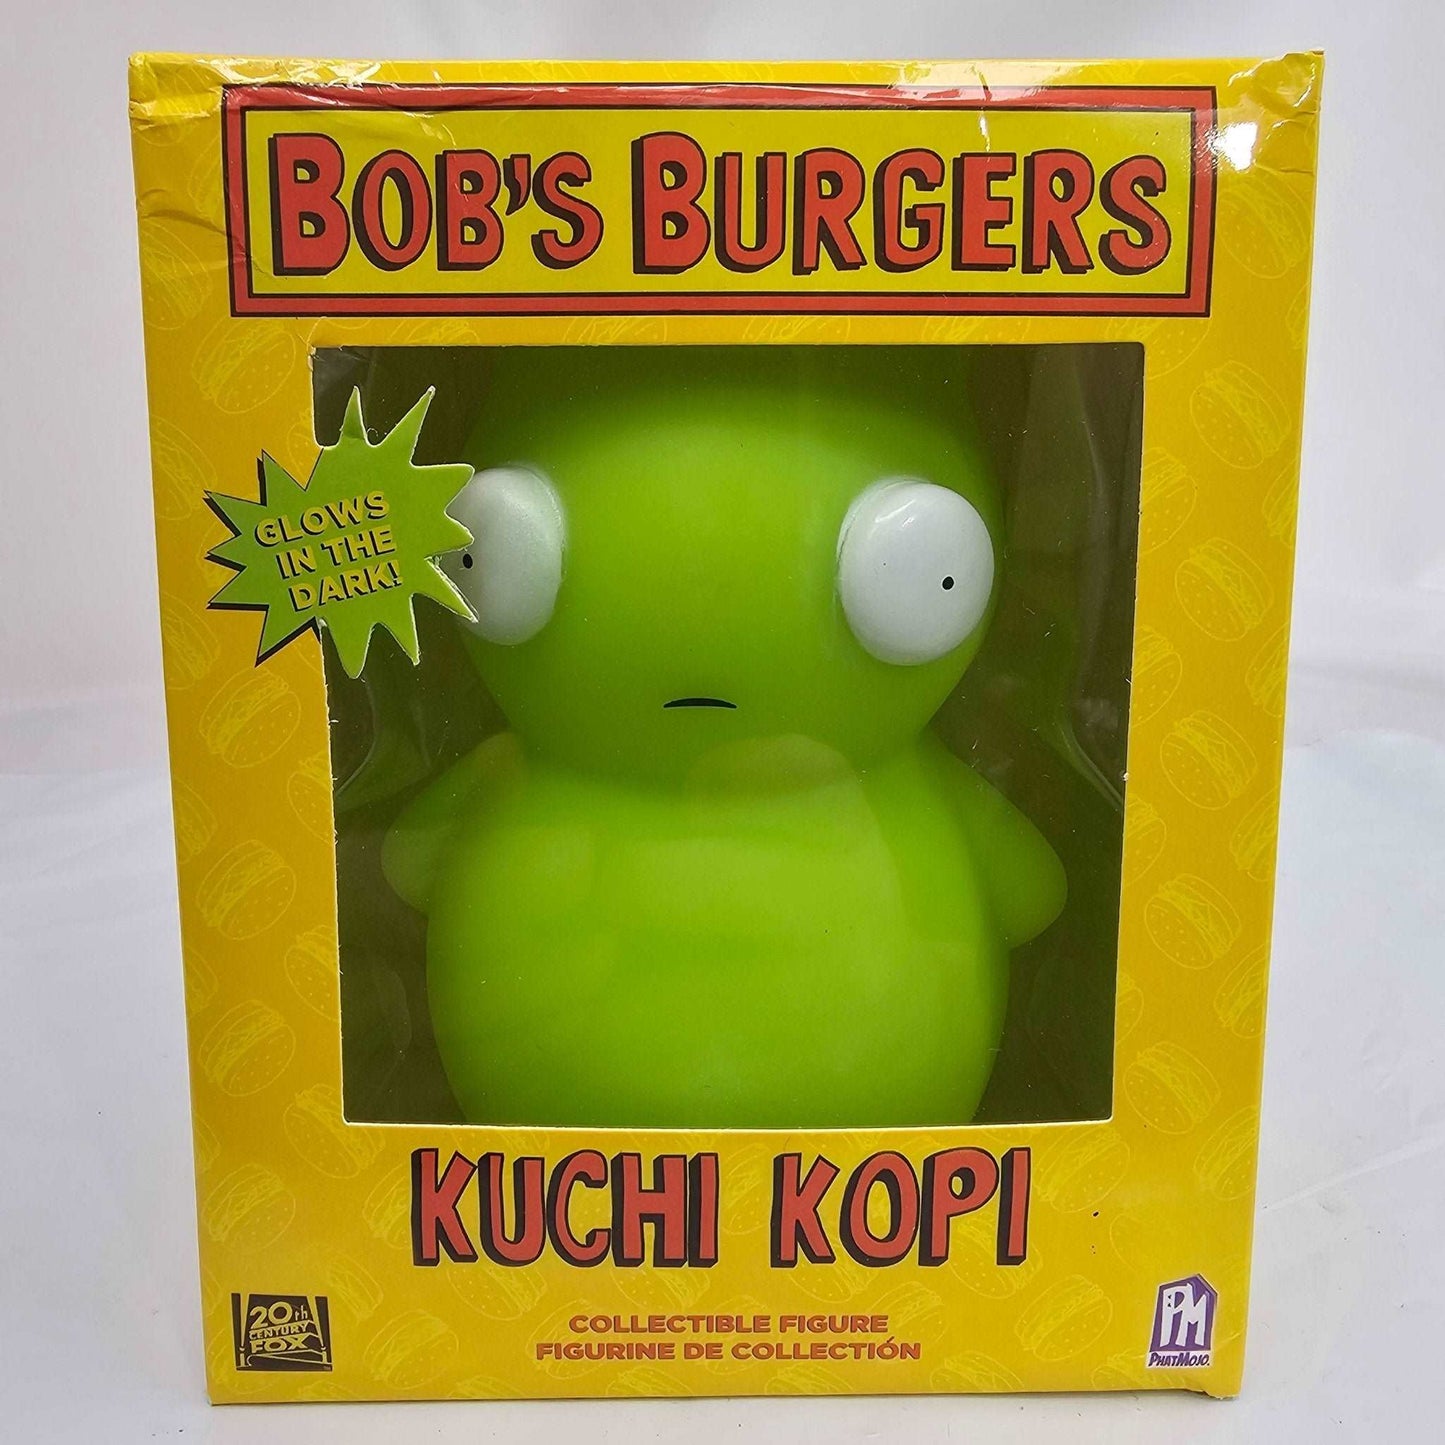 Bob's Burgers Kuchi Kopi Glow-in-the-Dark Collectible Figurine - DQ Distribution